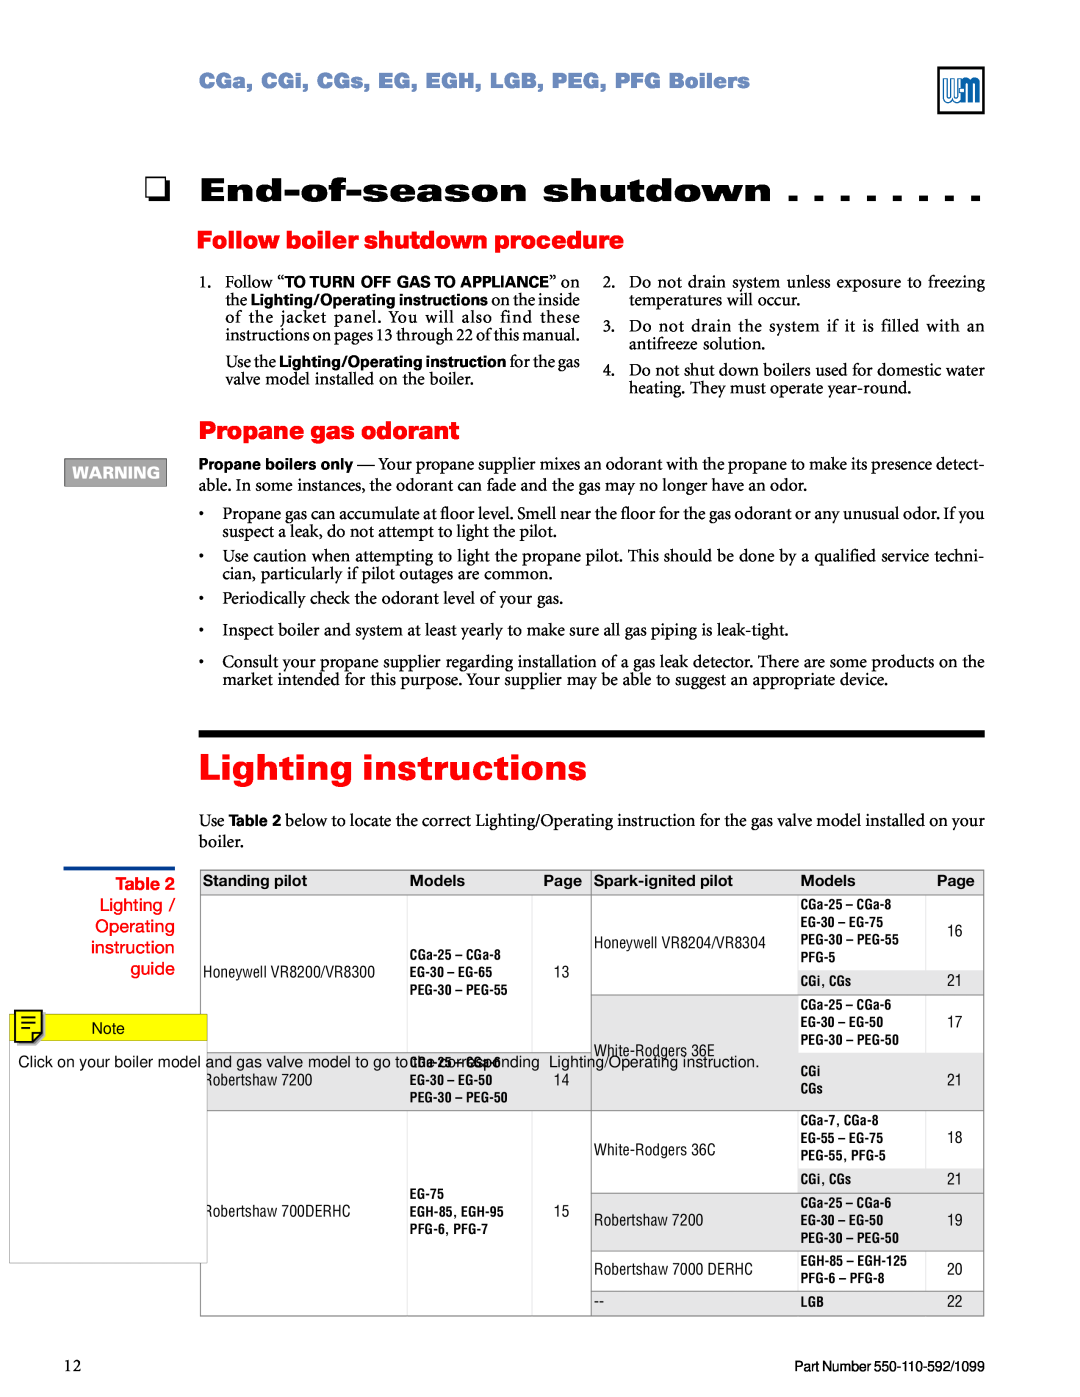 Weil-McLain CGa manual Lighting instructions, End-of-seasonshutdown, Follow boiler shutdown procedure, Propane gas odorant 